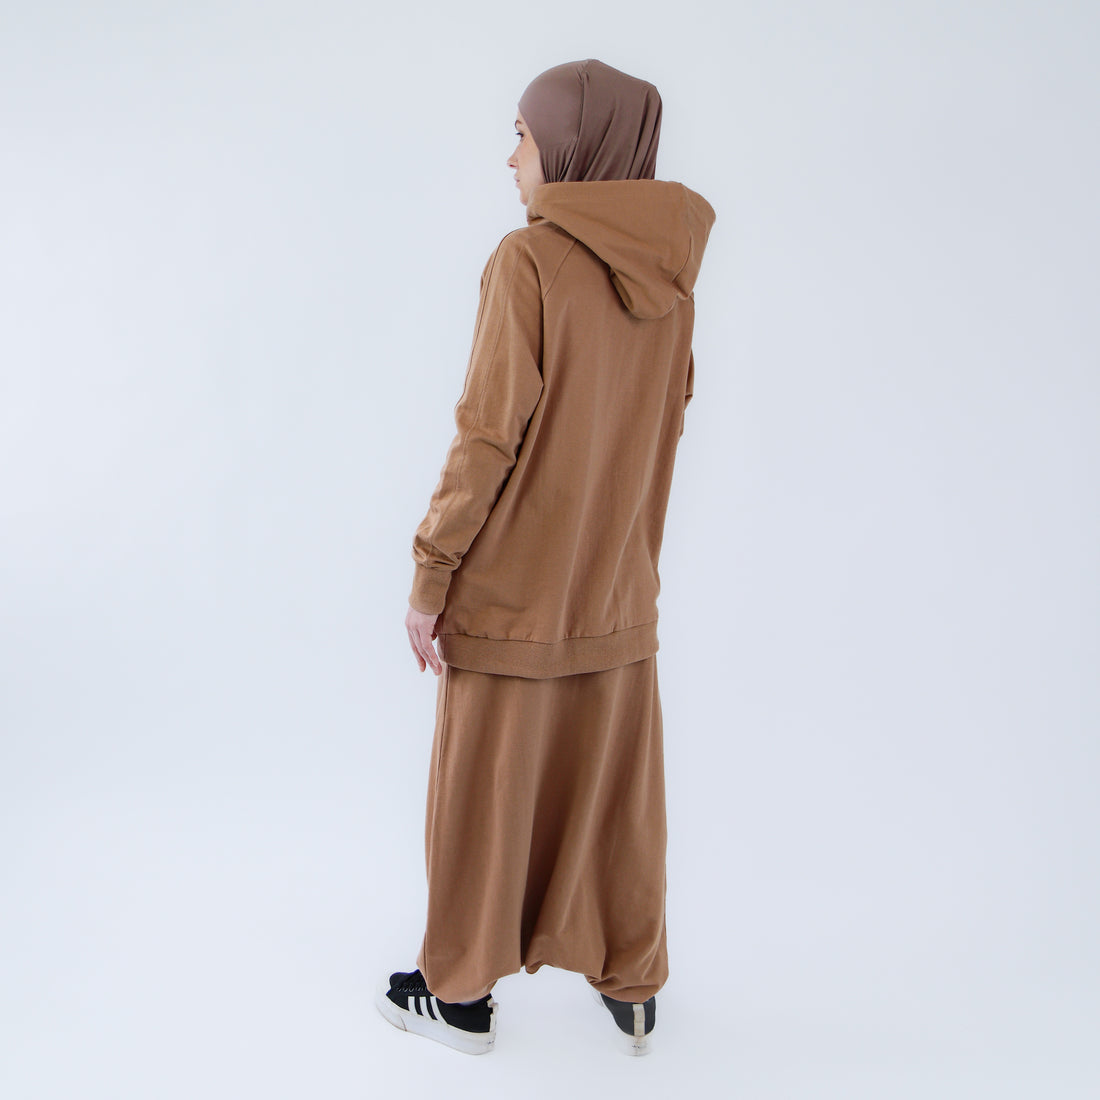 Sport Hijab Style: "Milk Coffee", Tracksuit - Hoodie with Harem Pants